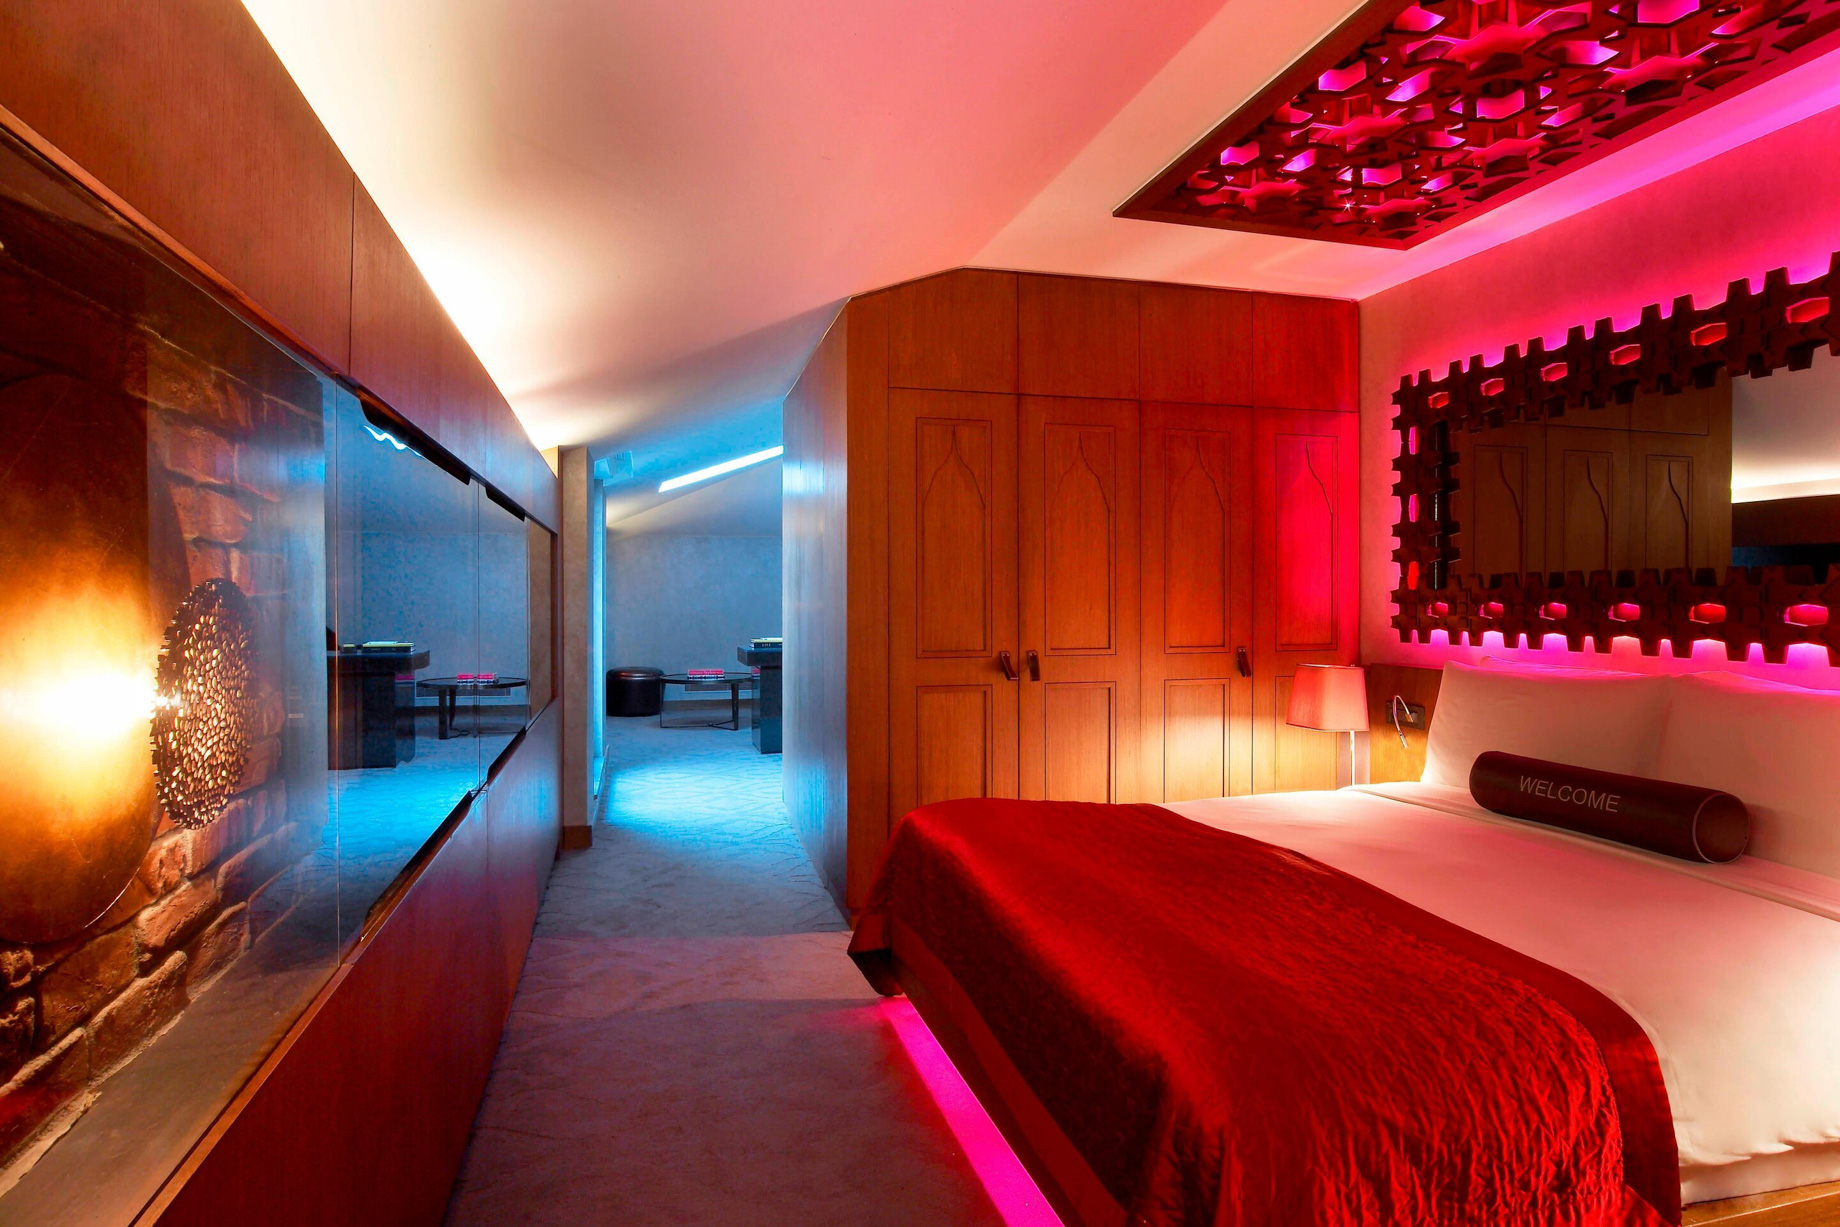 W Istanbul Hotel - Istanbul, Turkey - Marvelous Suite Bedroom